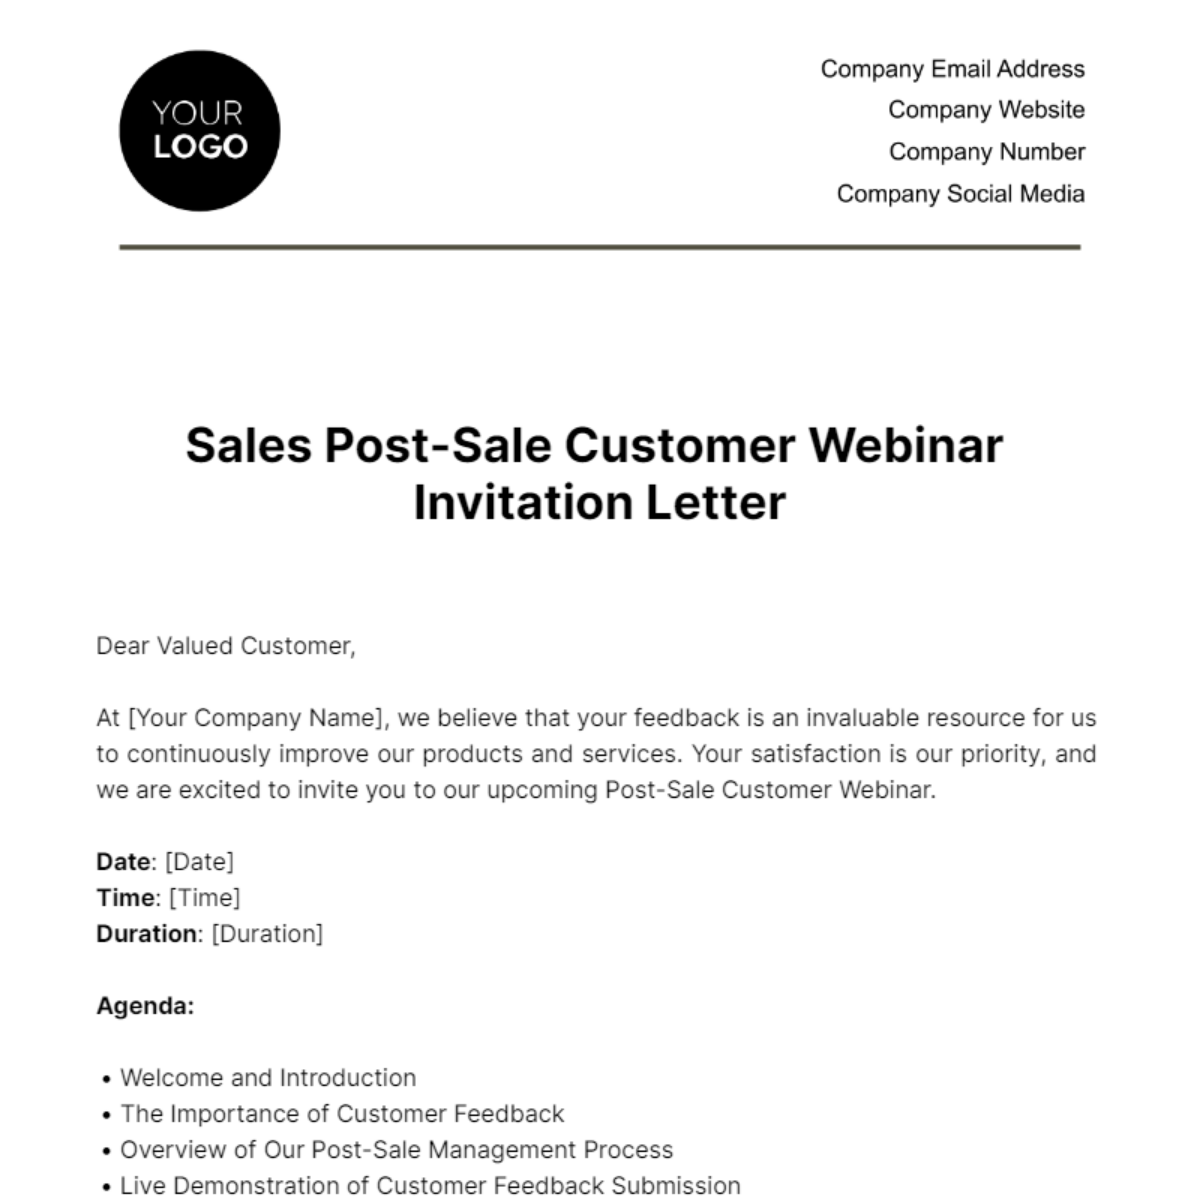 Sales Post-Sale Customer Webinar Invitation Letter Template